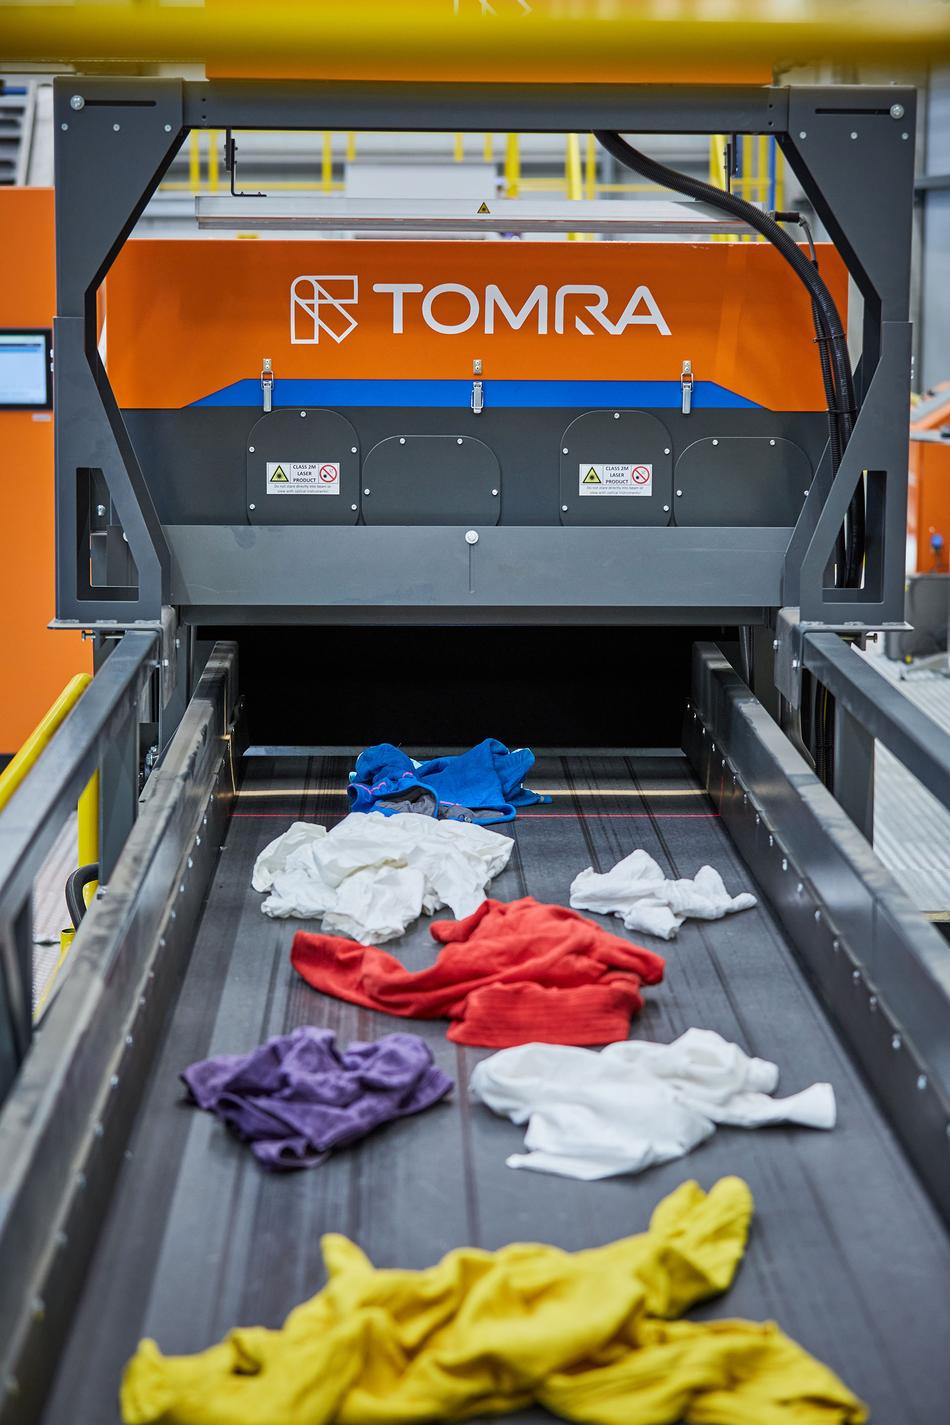 Textiles on sorting band of TOMRA Machine